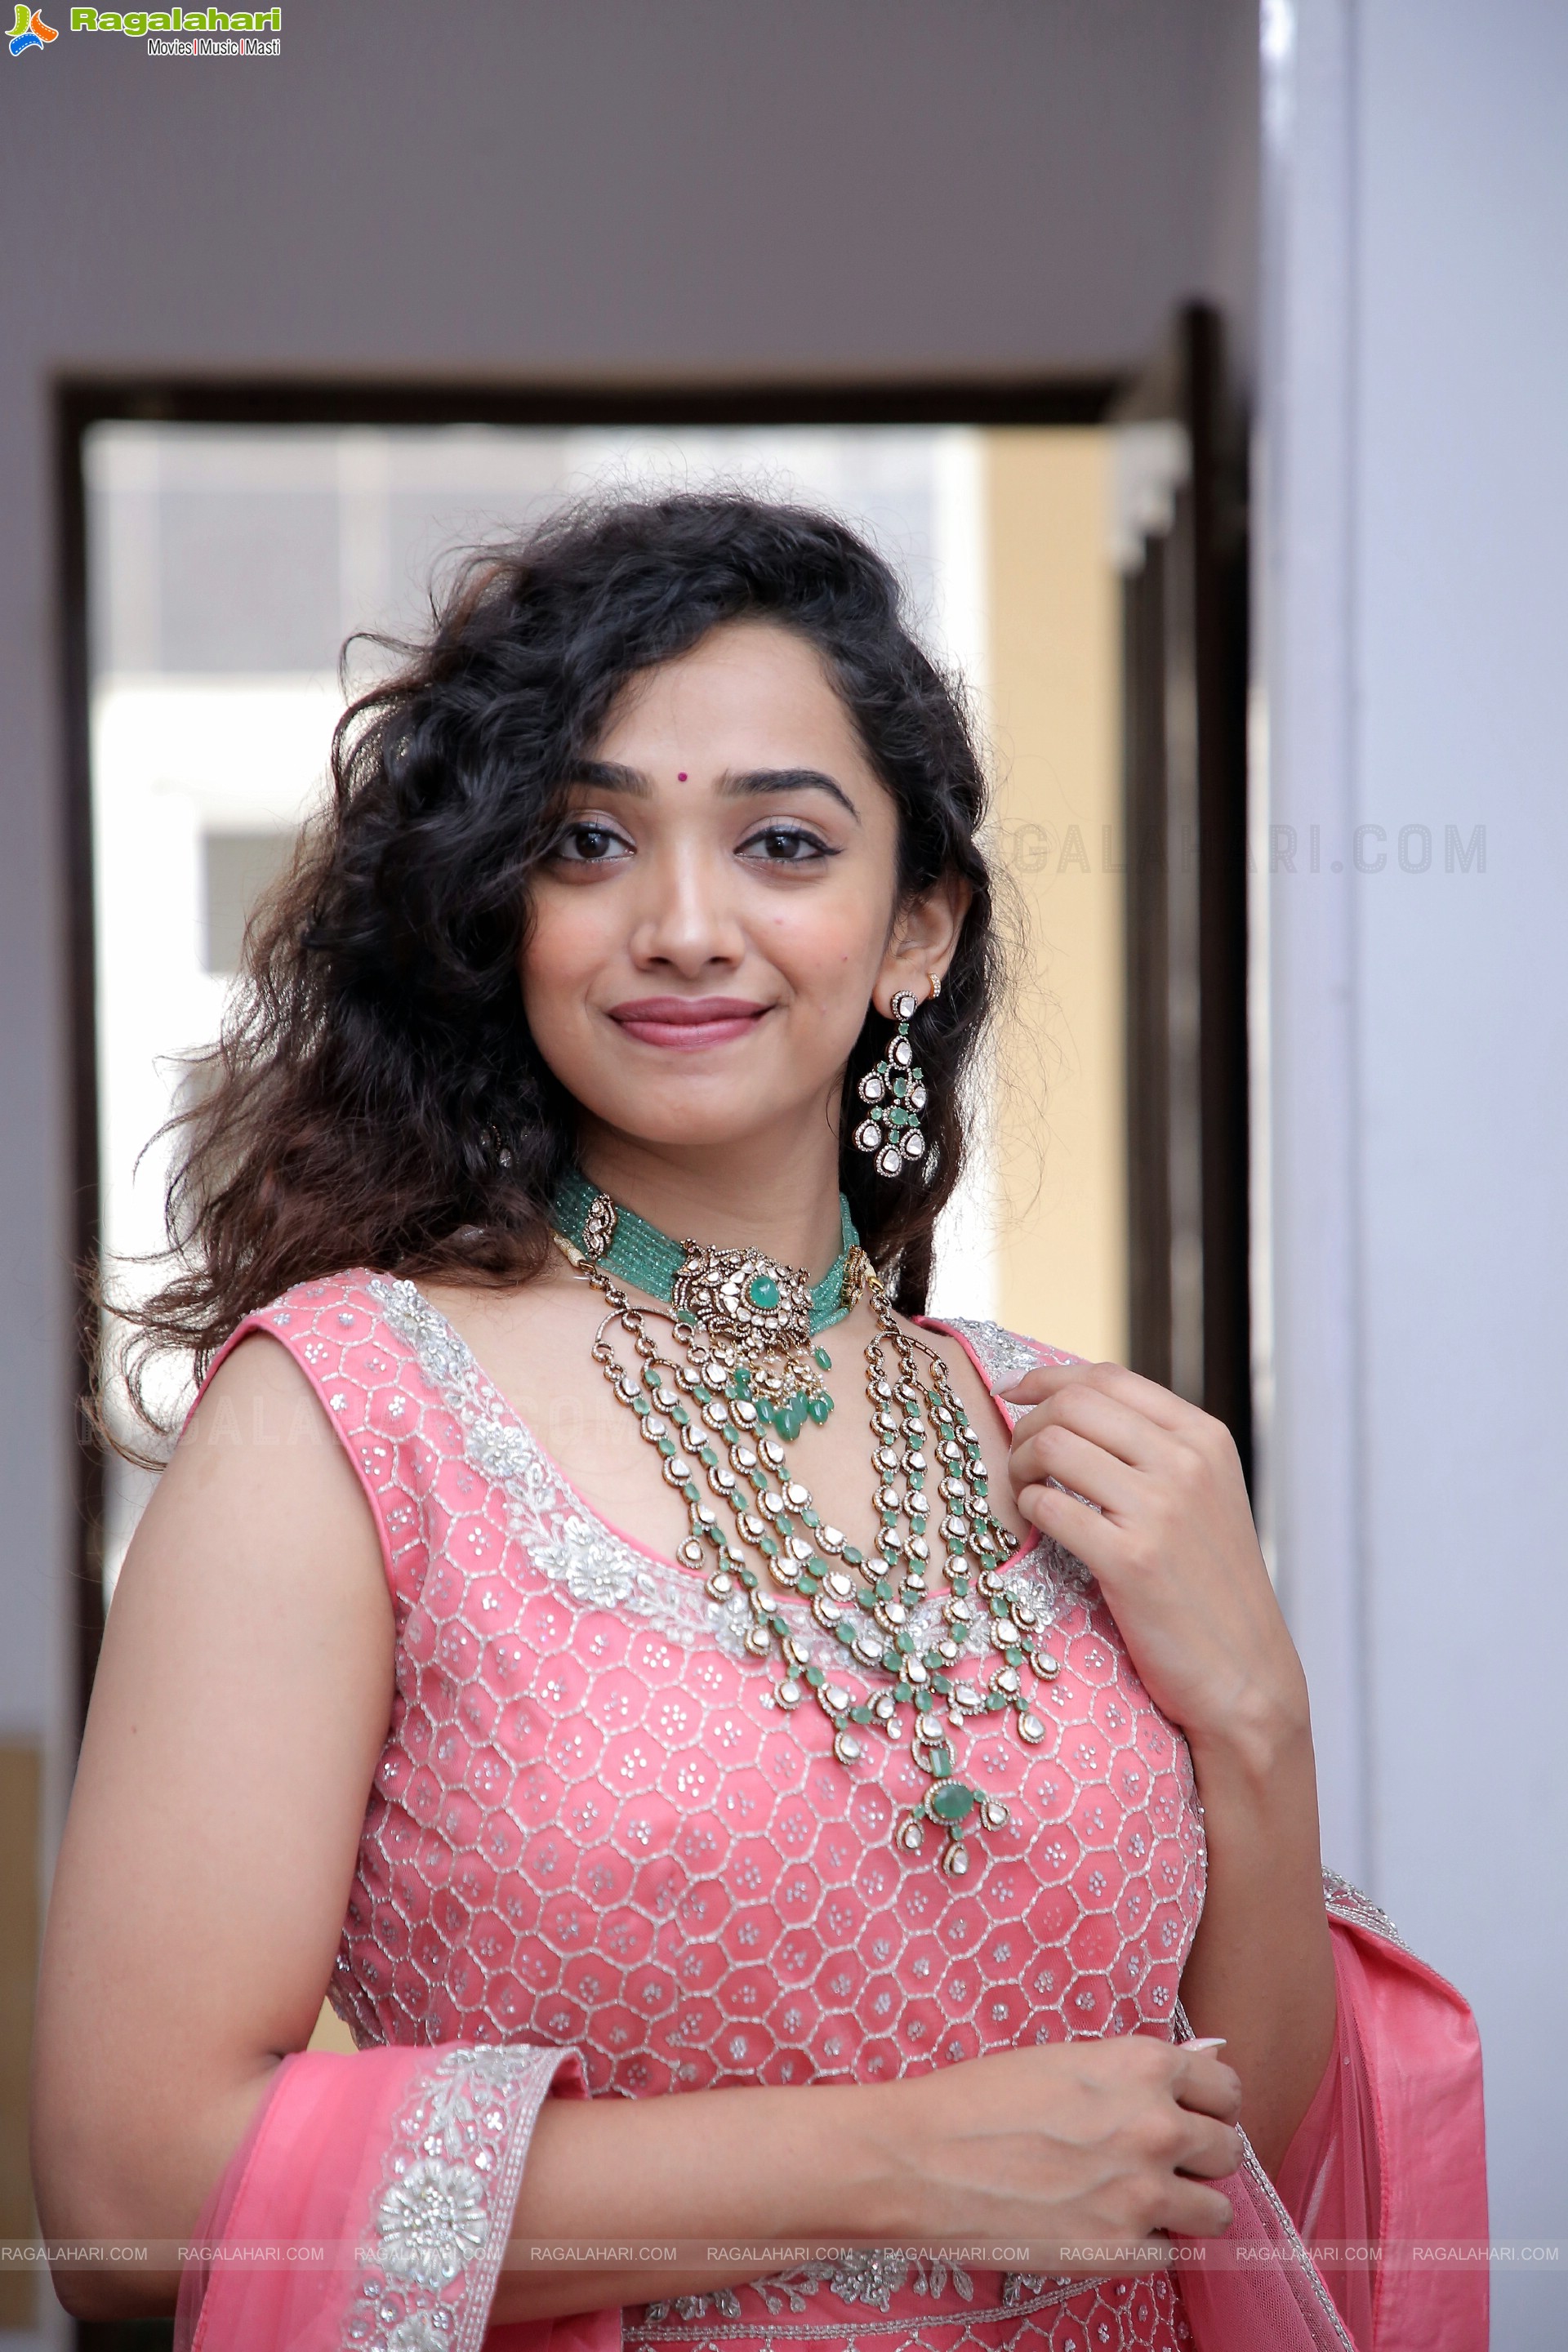 Saanve Megghana Poses With Jewellery, HD Photo Gallery